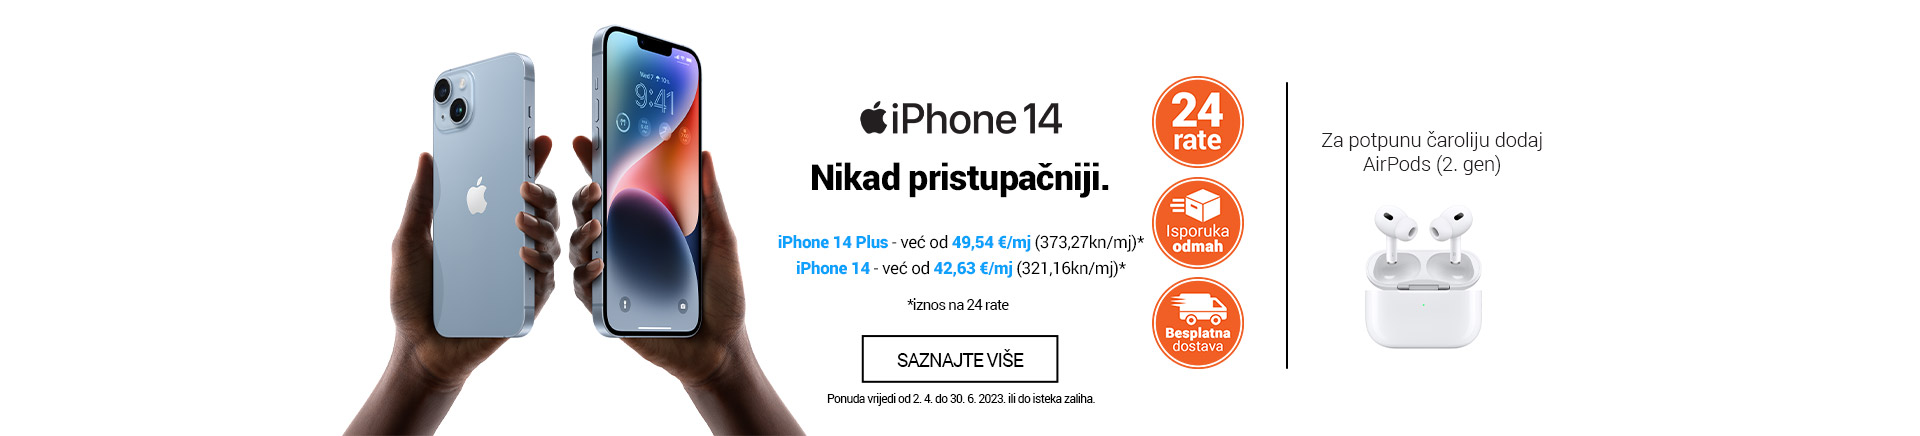 HR Apple iPhone 14 Plus Nikad Pristupacniji MOBILE 380 X 436.jpg